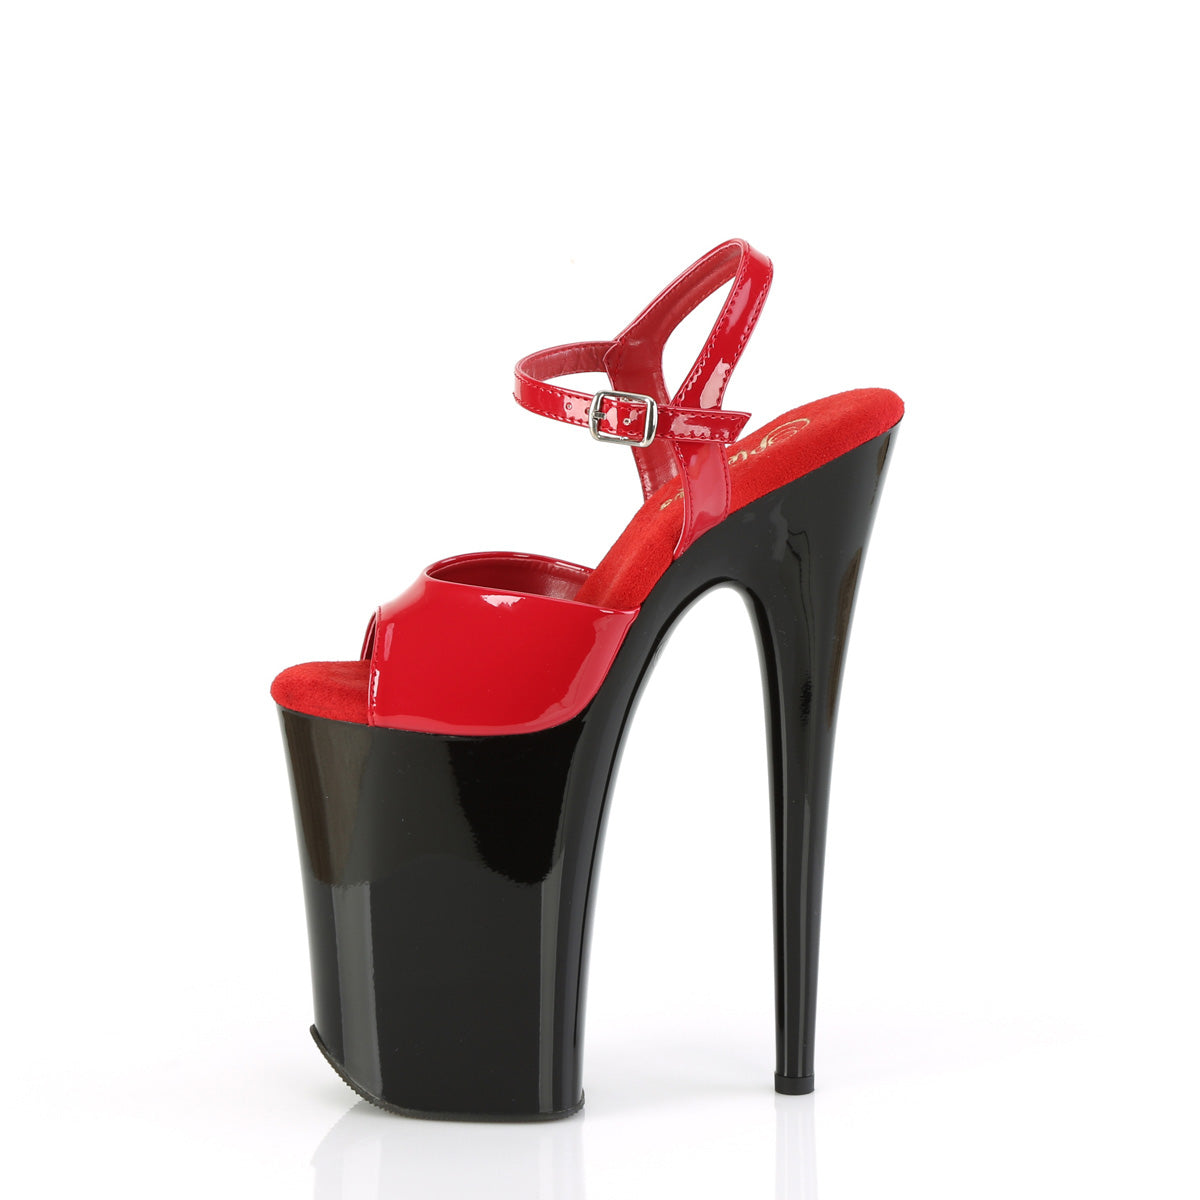 9 Inch Heel INFINITY-909 Red Patent Black